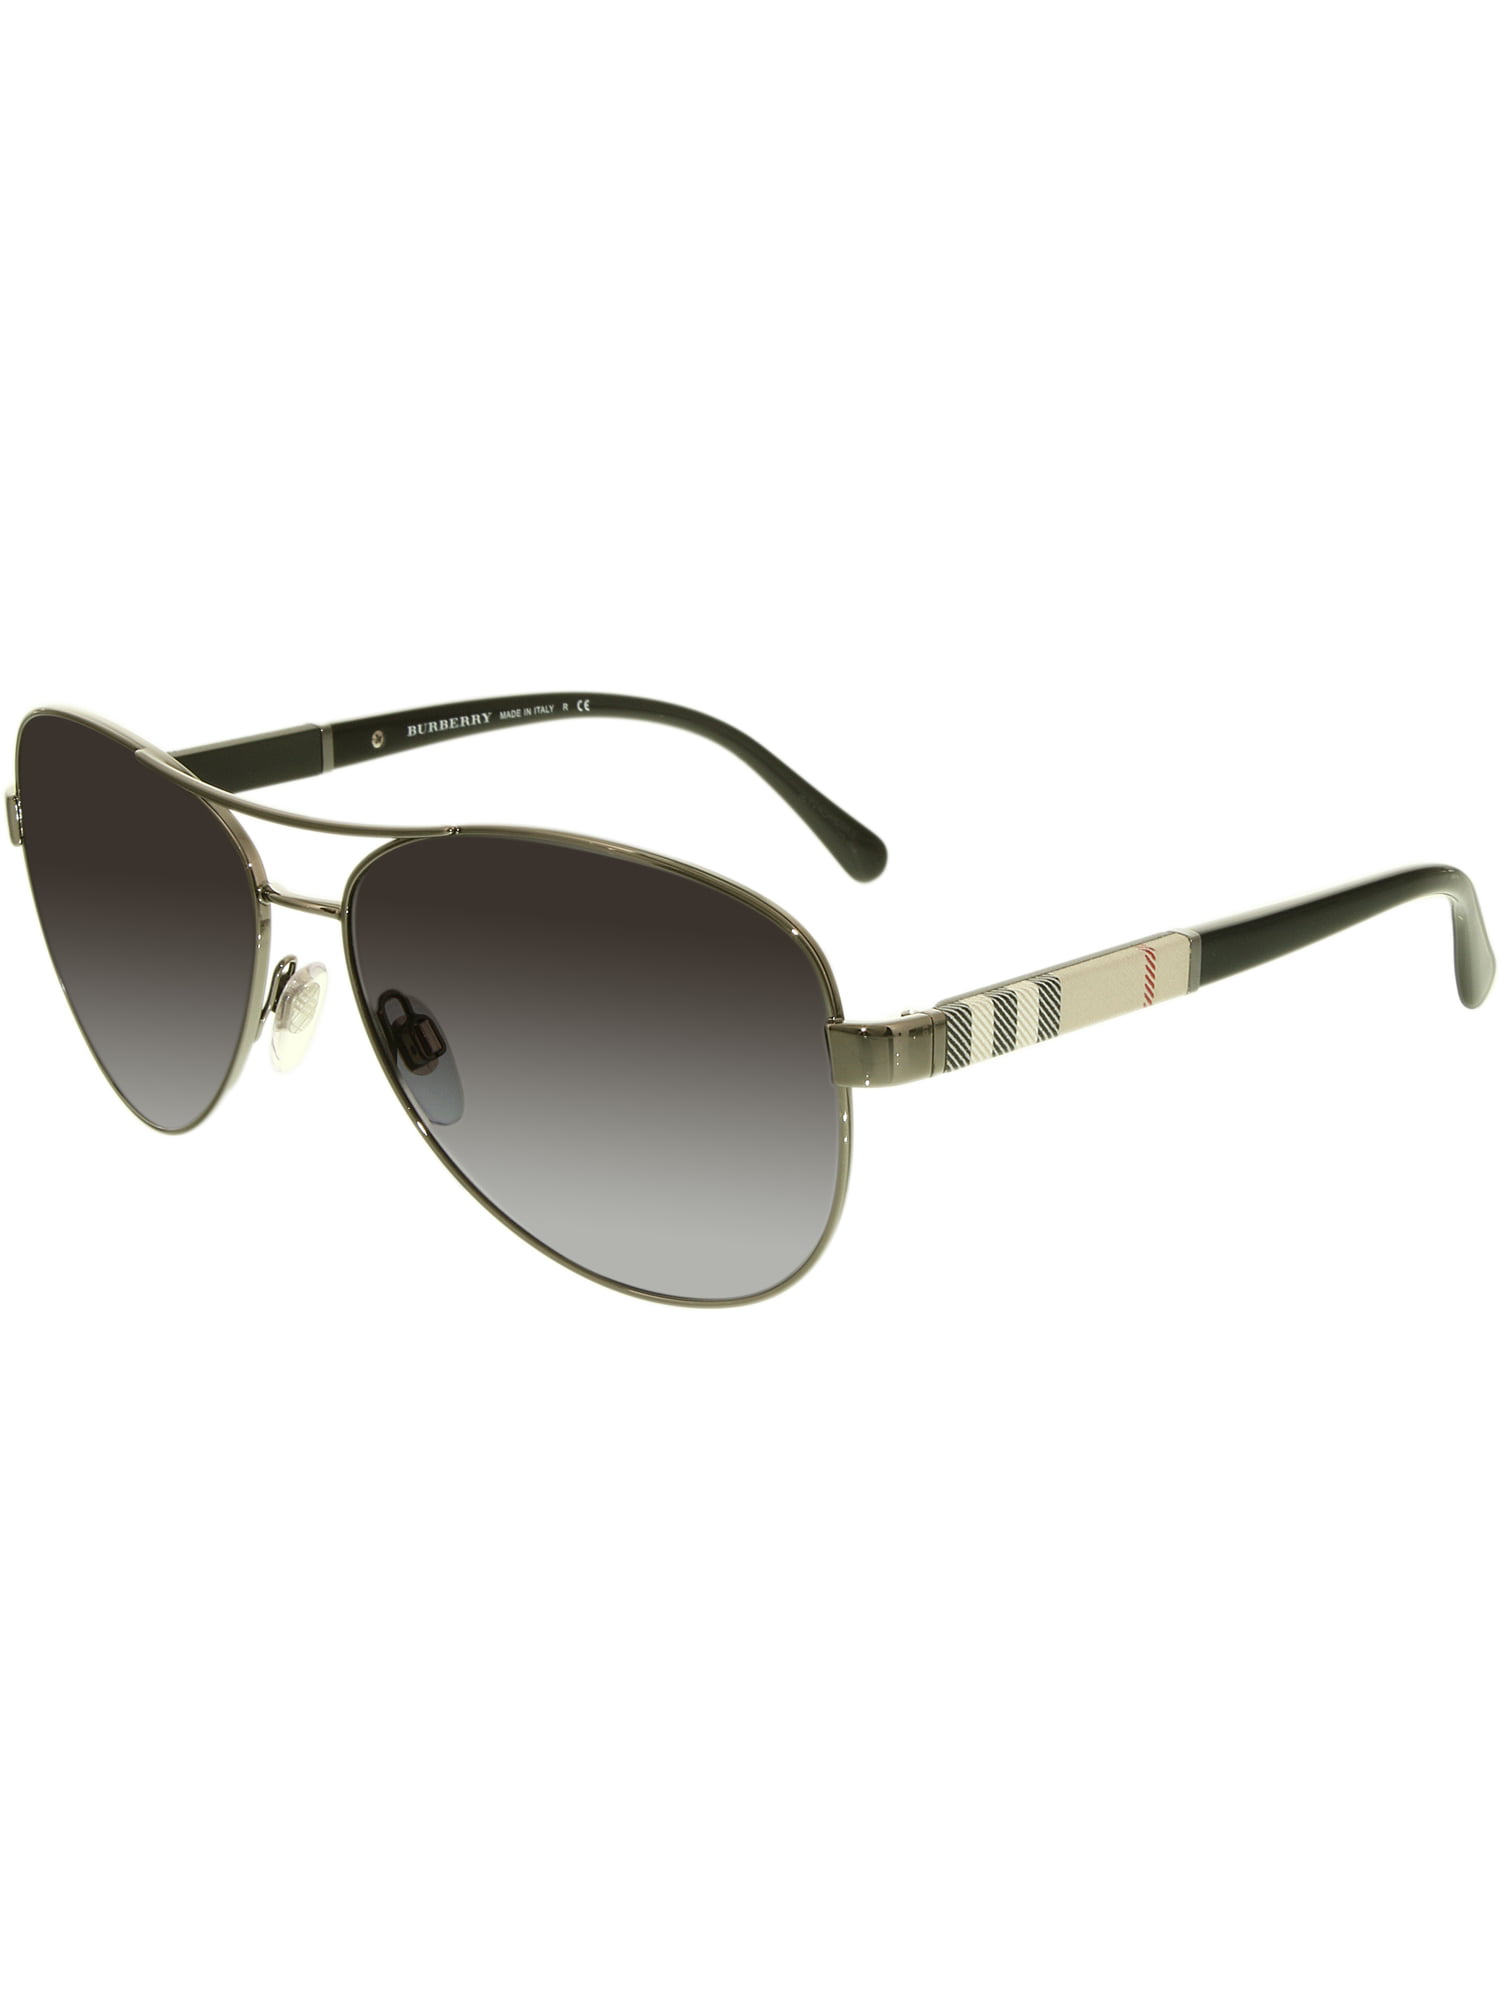 Burberry aviator sunglasses